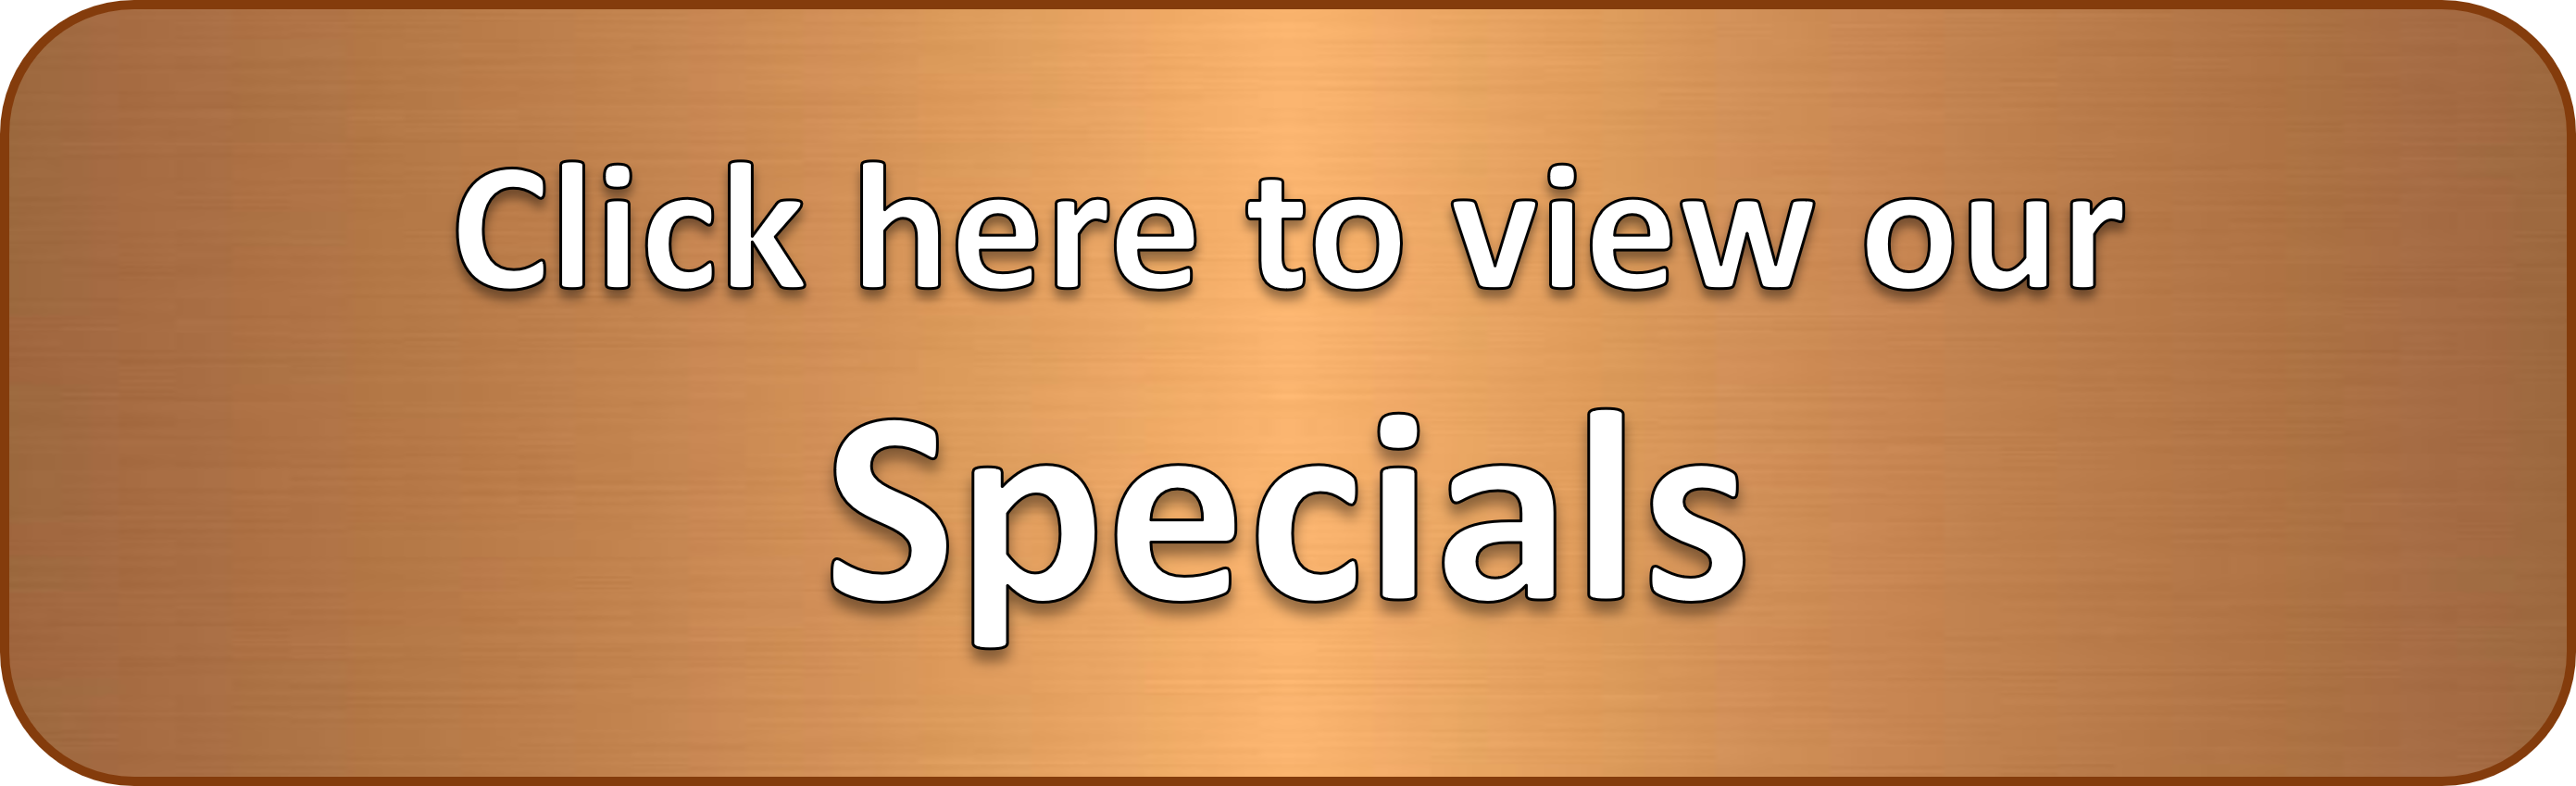 mt view specials button